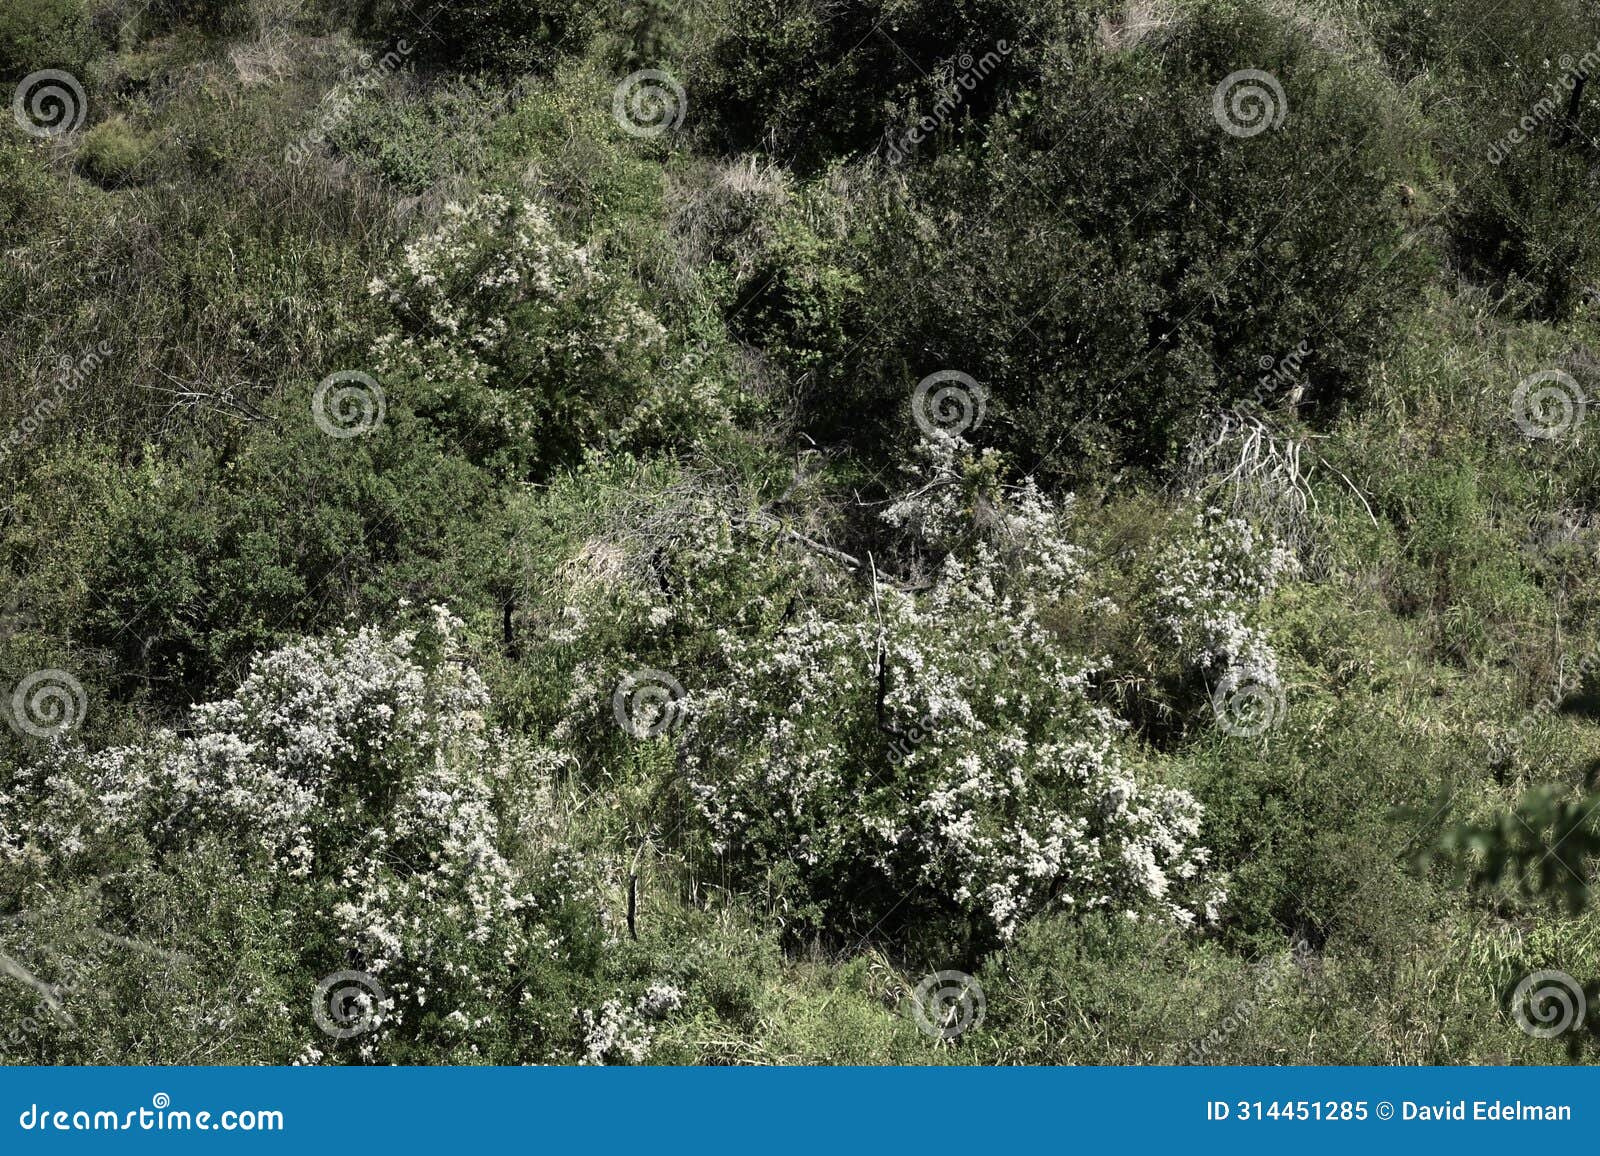 franklin trail carpinteria california 46